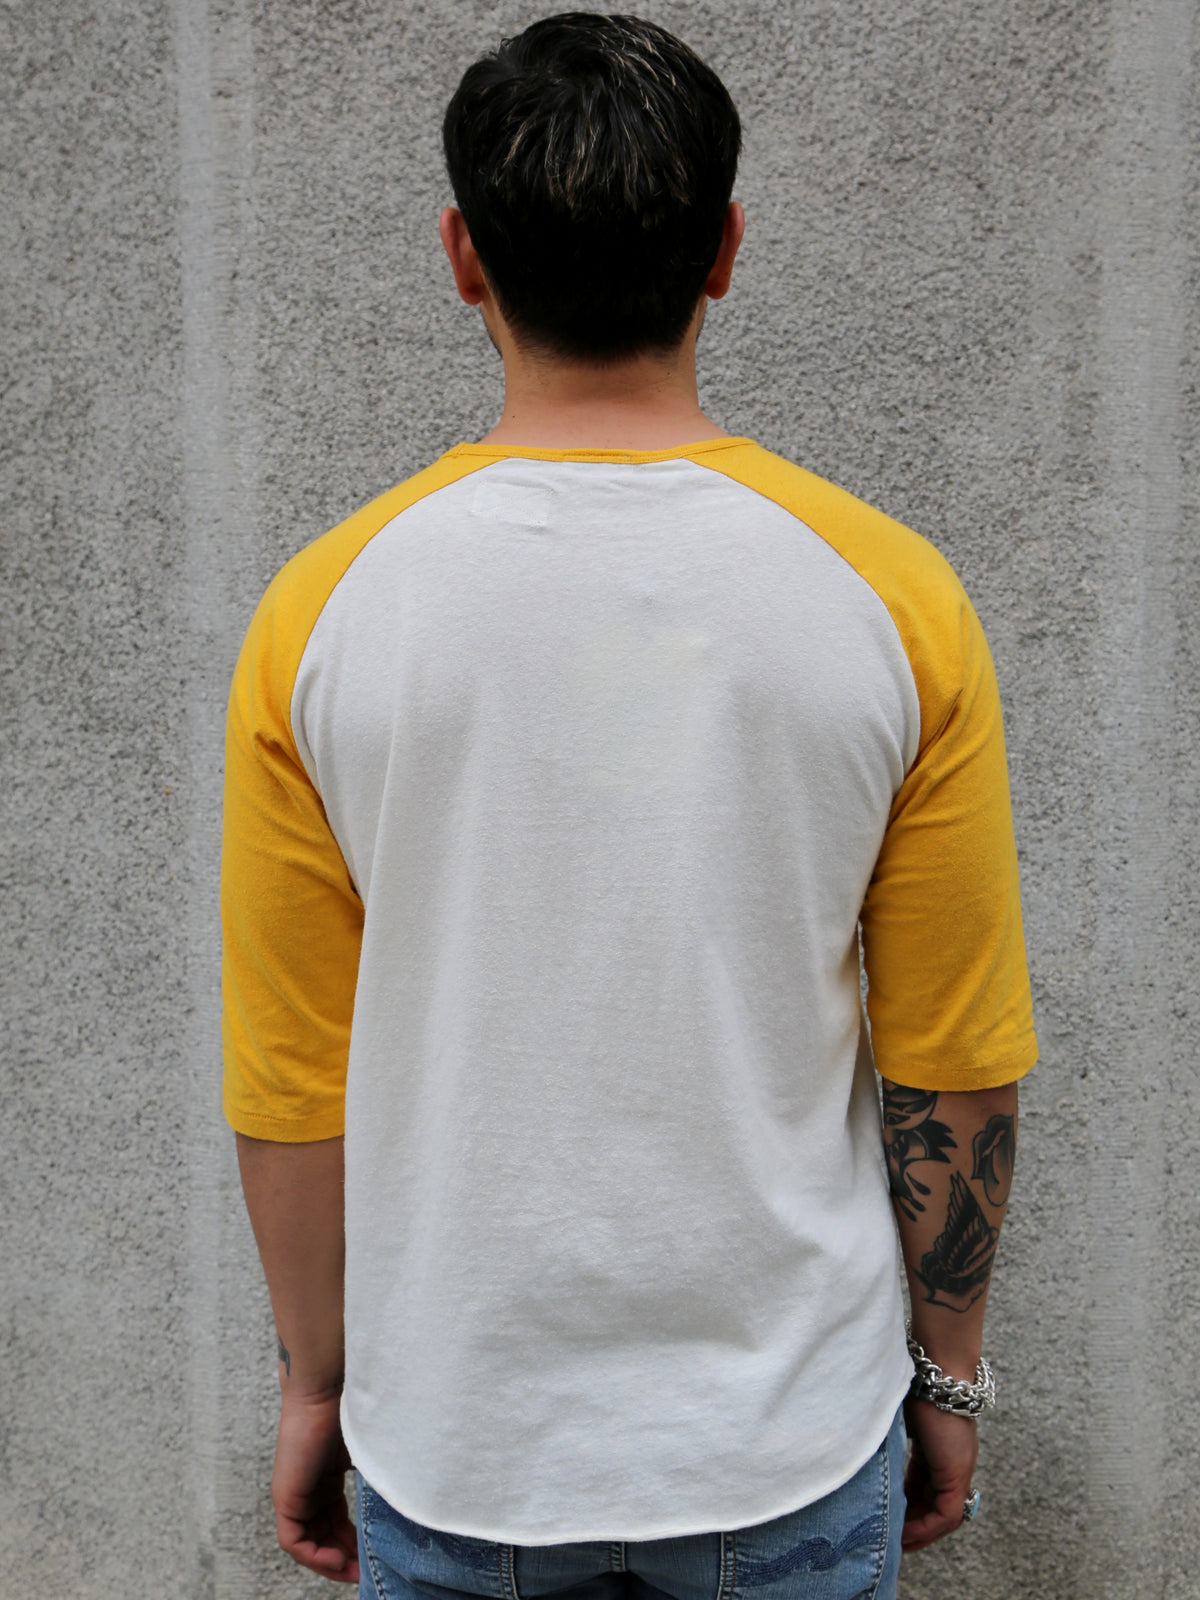 Indigofera Leon Raglan Sweater – Cocatoo Body / Yellow Sleeve (2278-354-02)